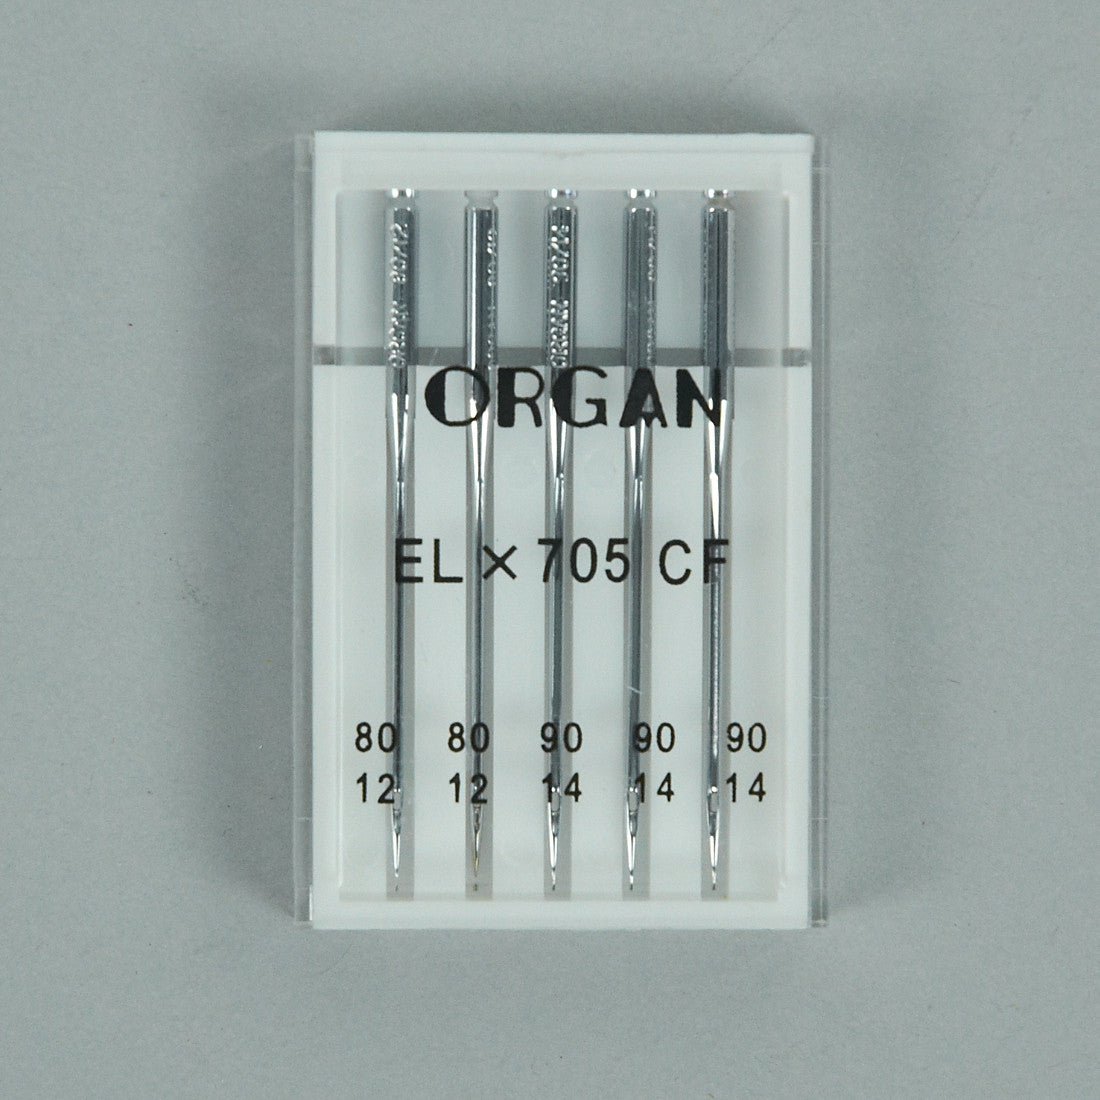 Organ ELx705 Needles Multi-Pack - 80/90